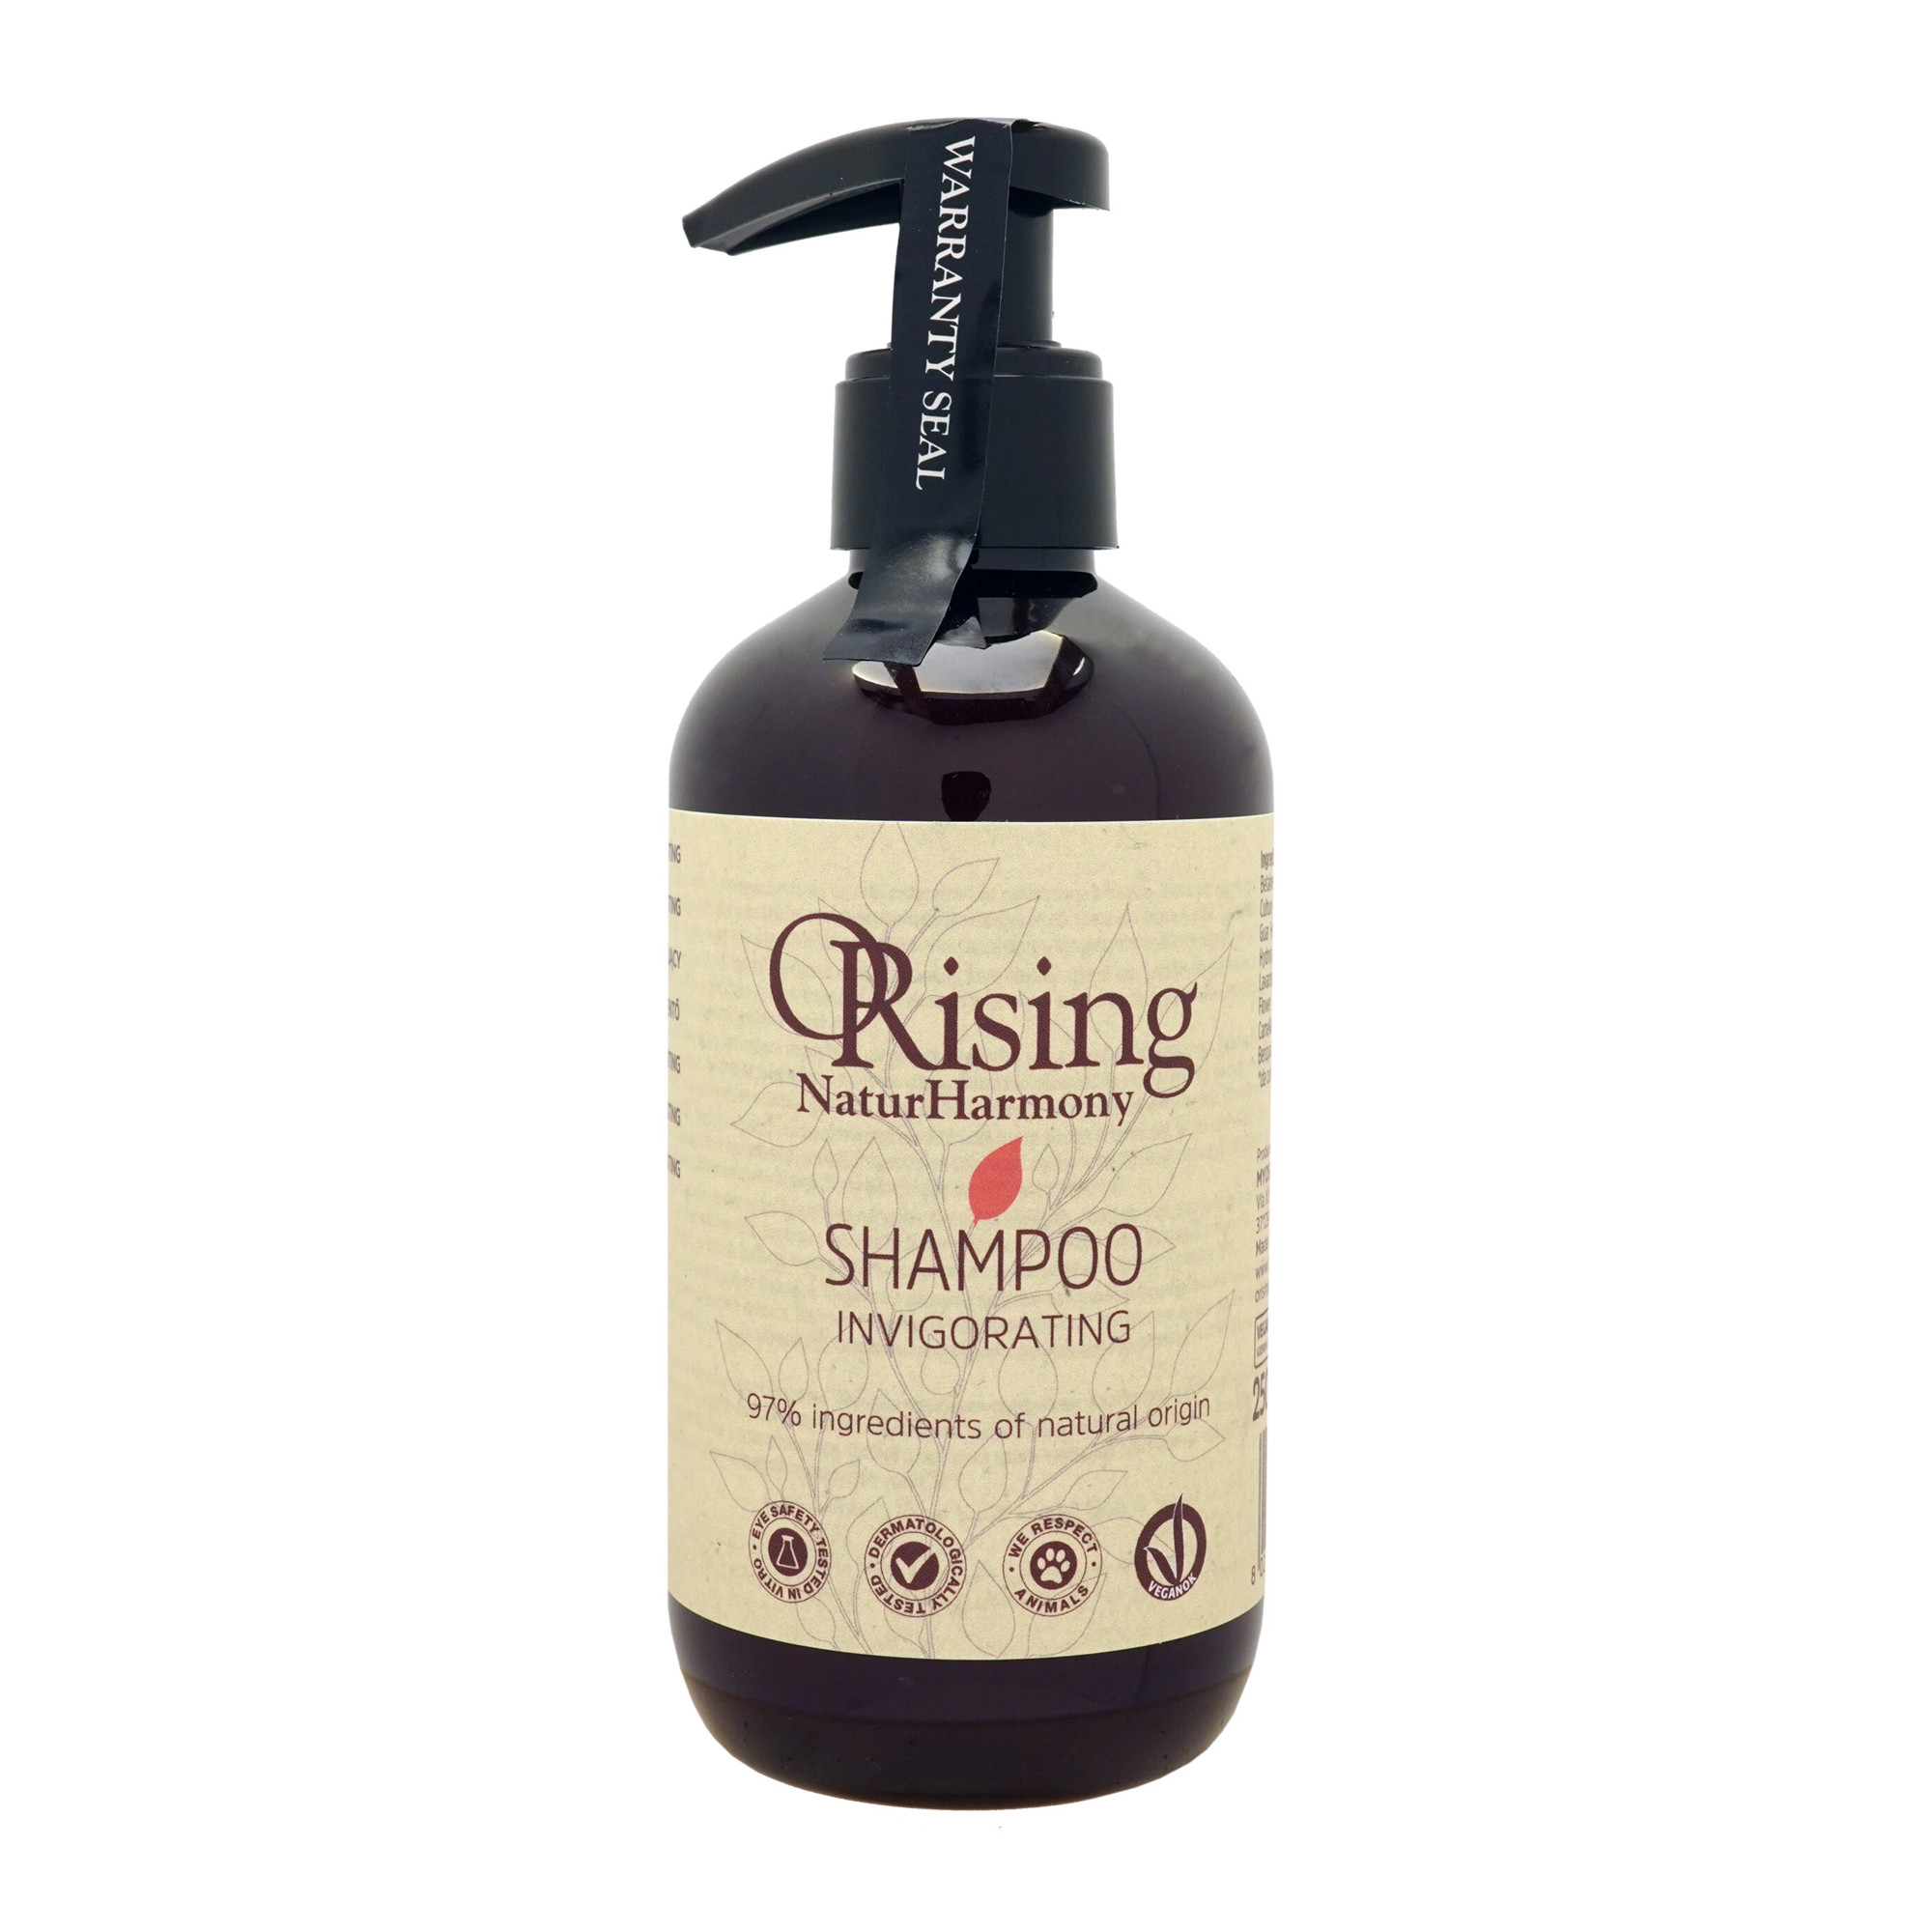 Orising Natur Harmony Invigorating Shampoo - Стимулюючий шампунь